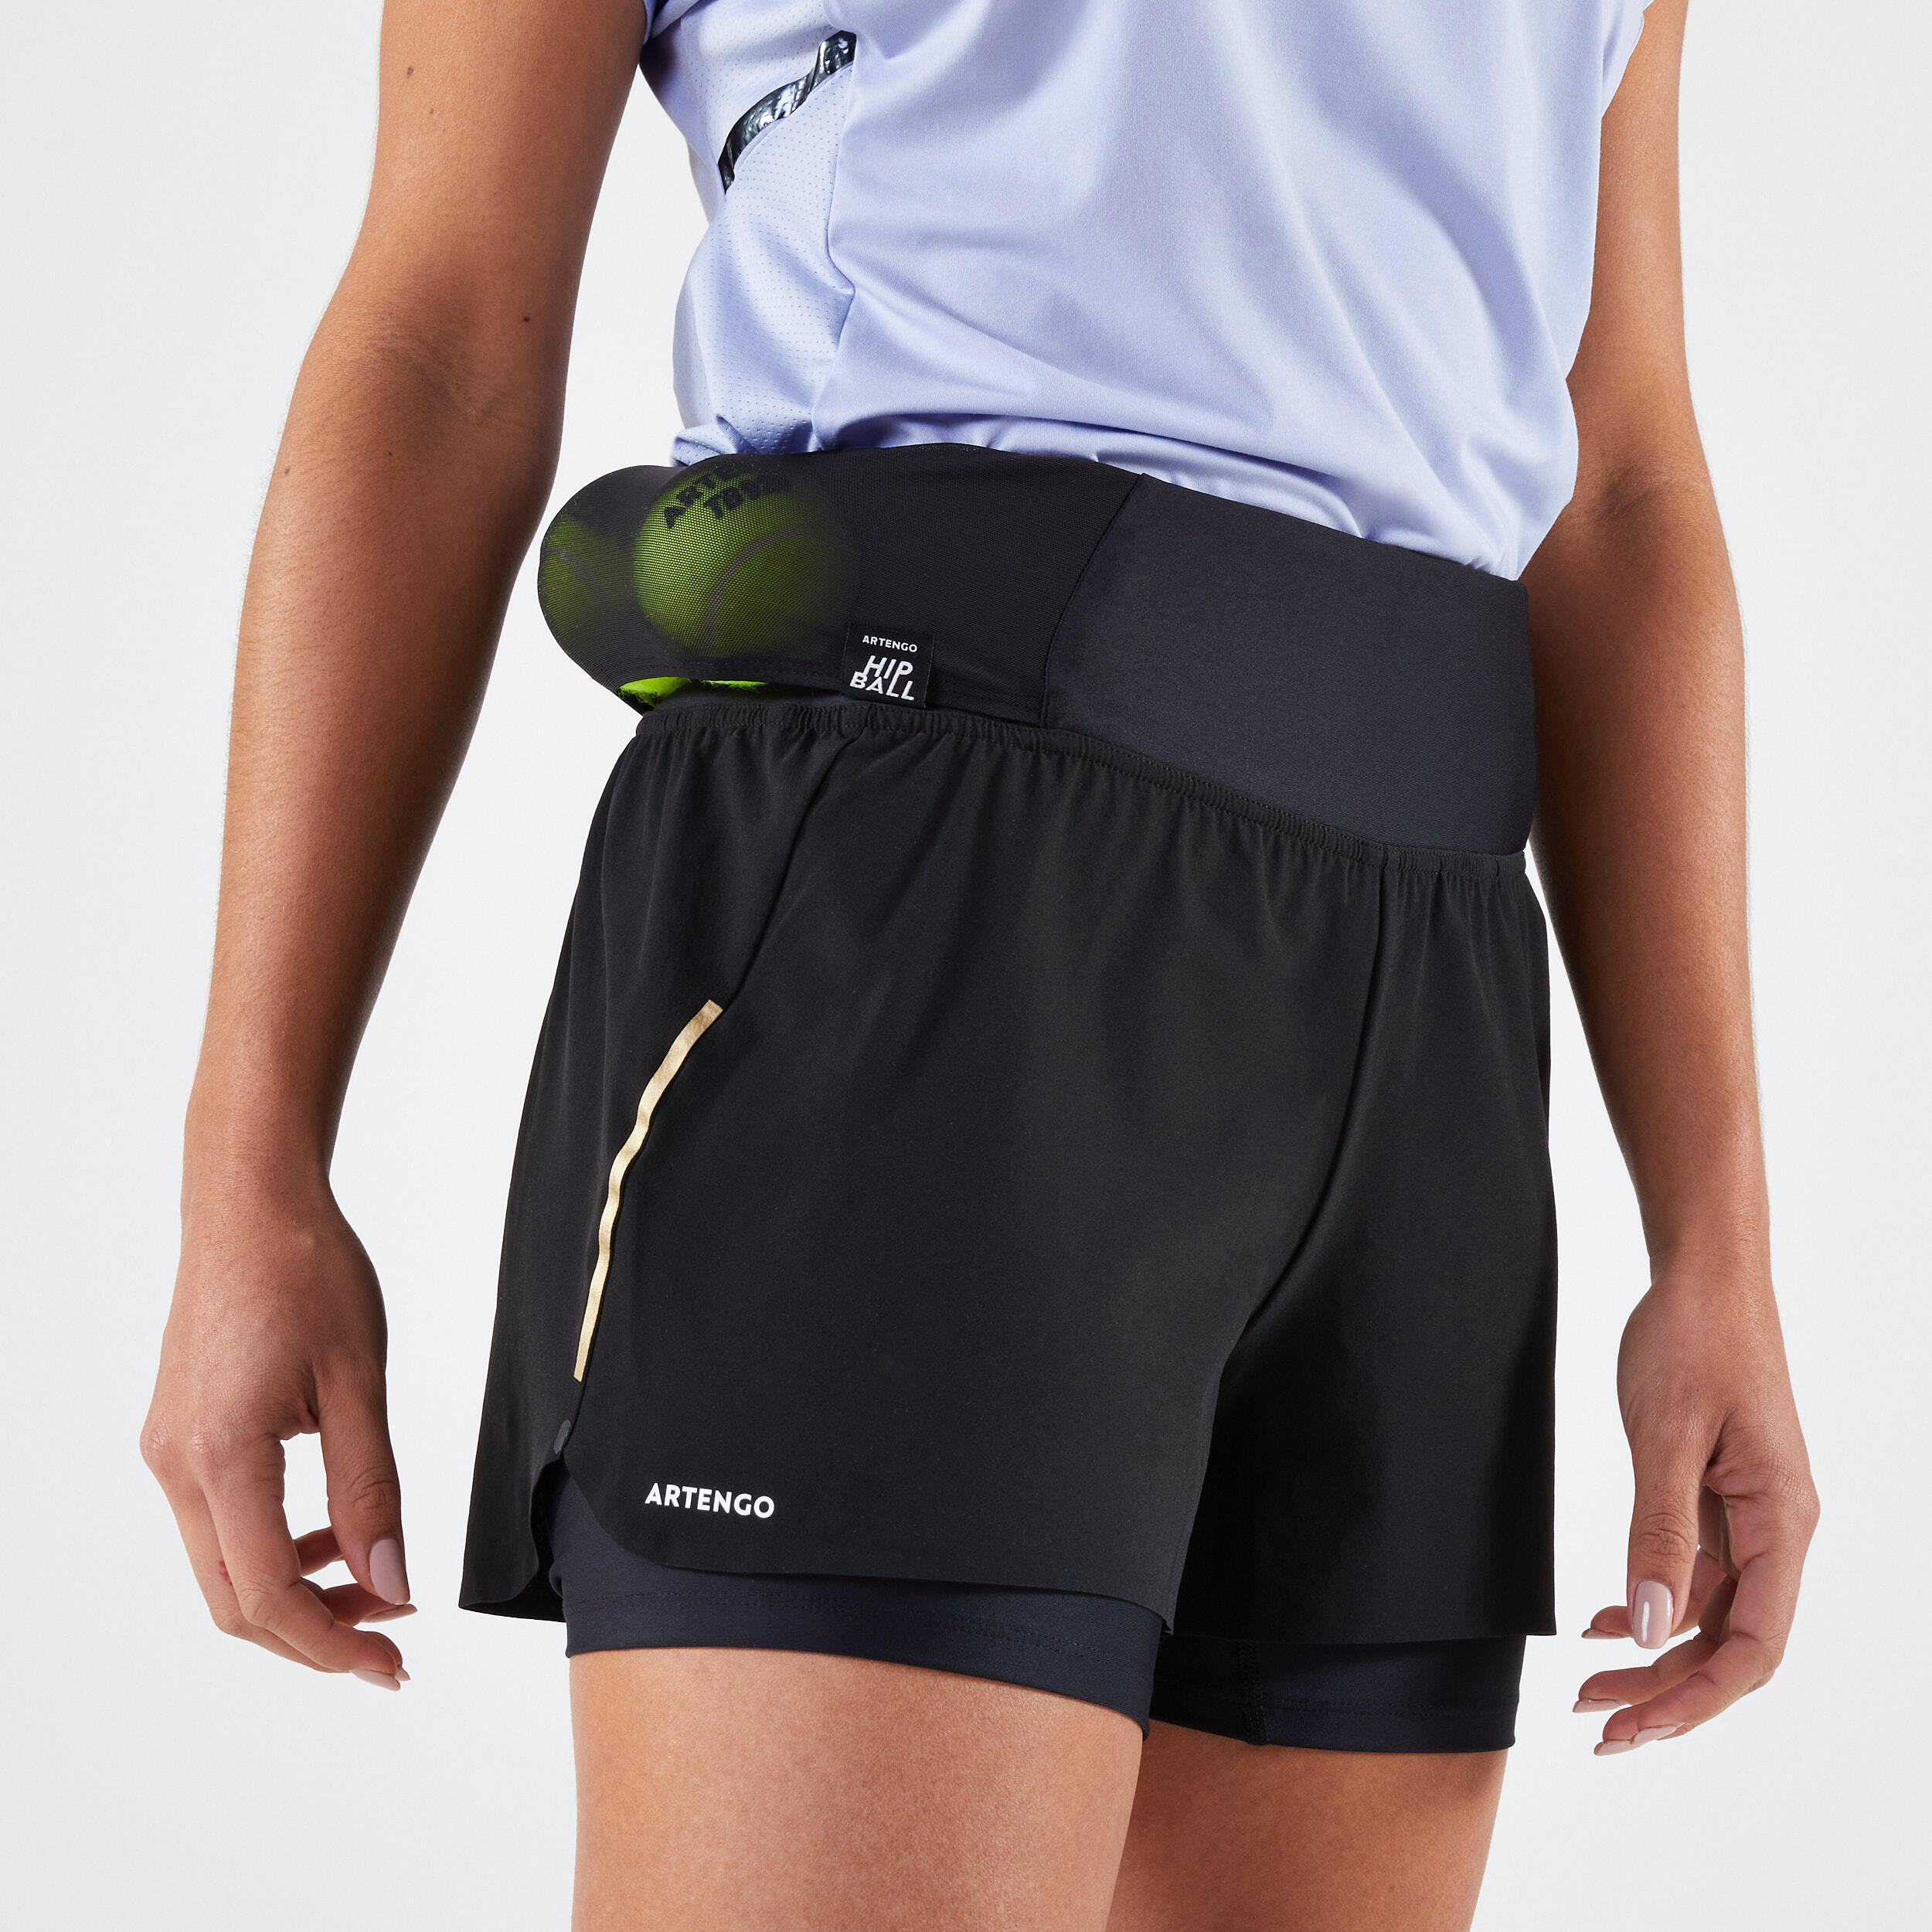 ARTENGO Women's Tennis Dry Hip Ball Shorts - Black